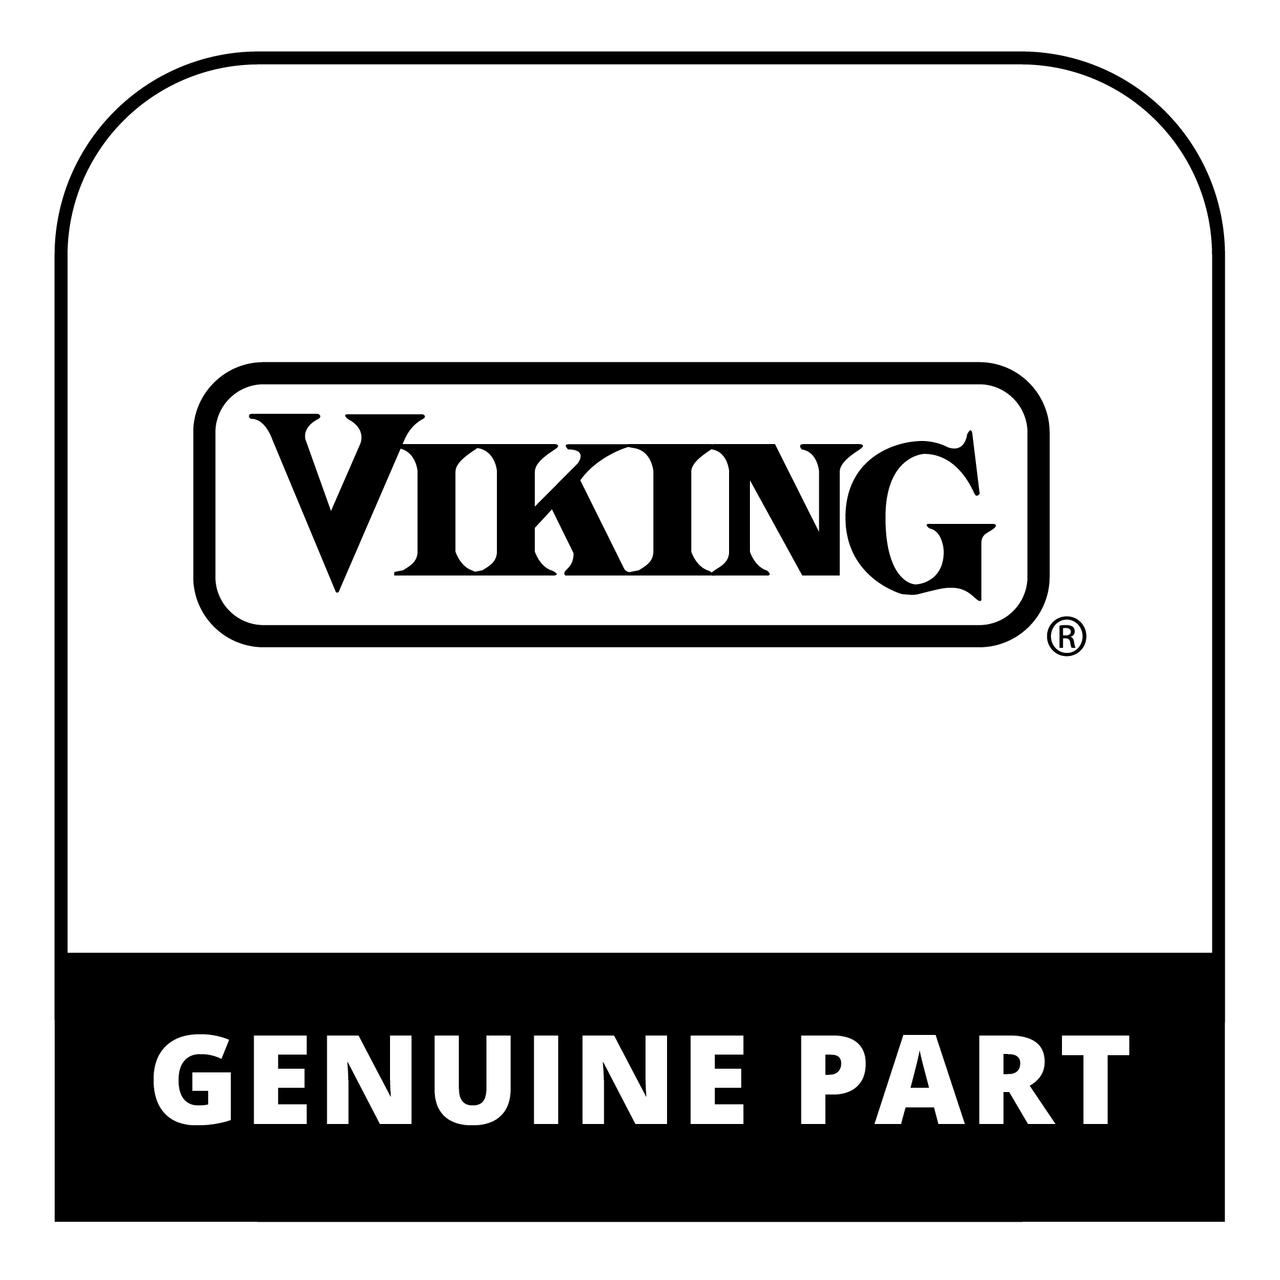 Viking A10016551 - Warming Drawer Trim Brkt - Genuine Viking Part